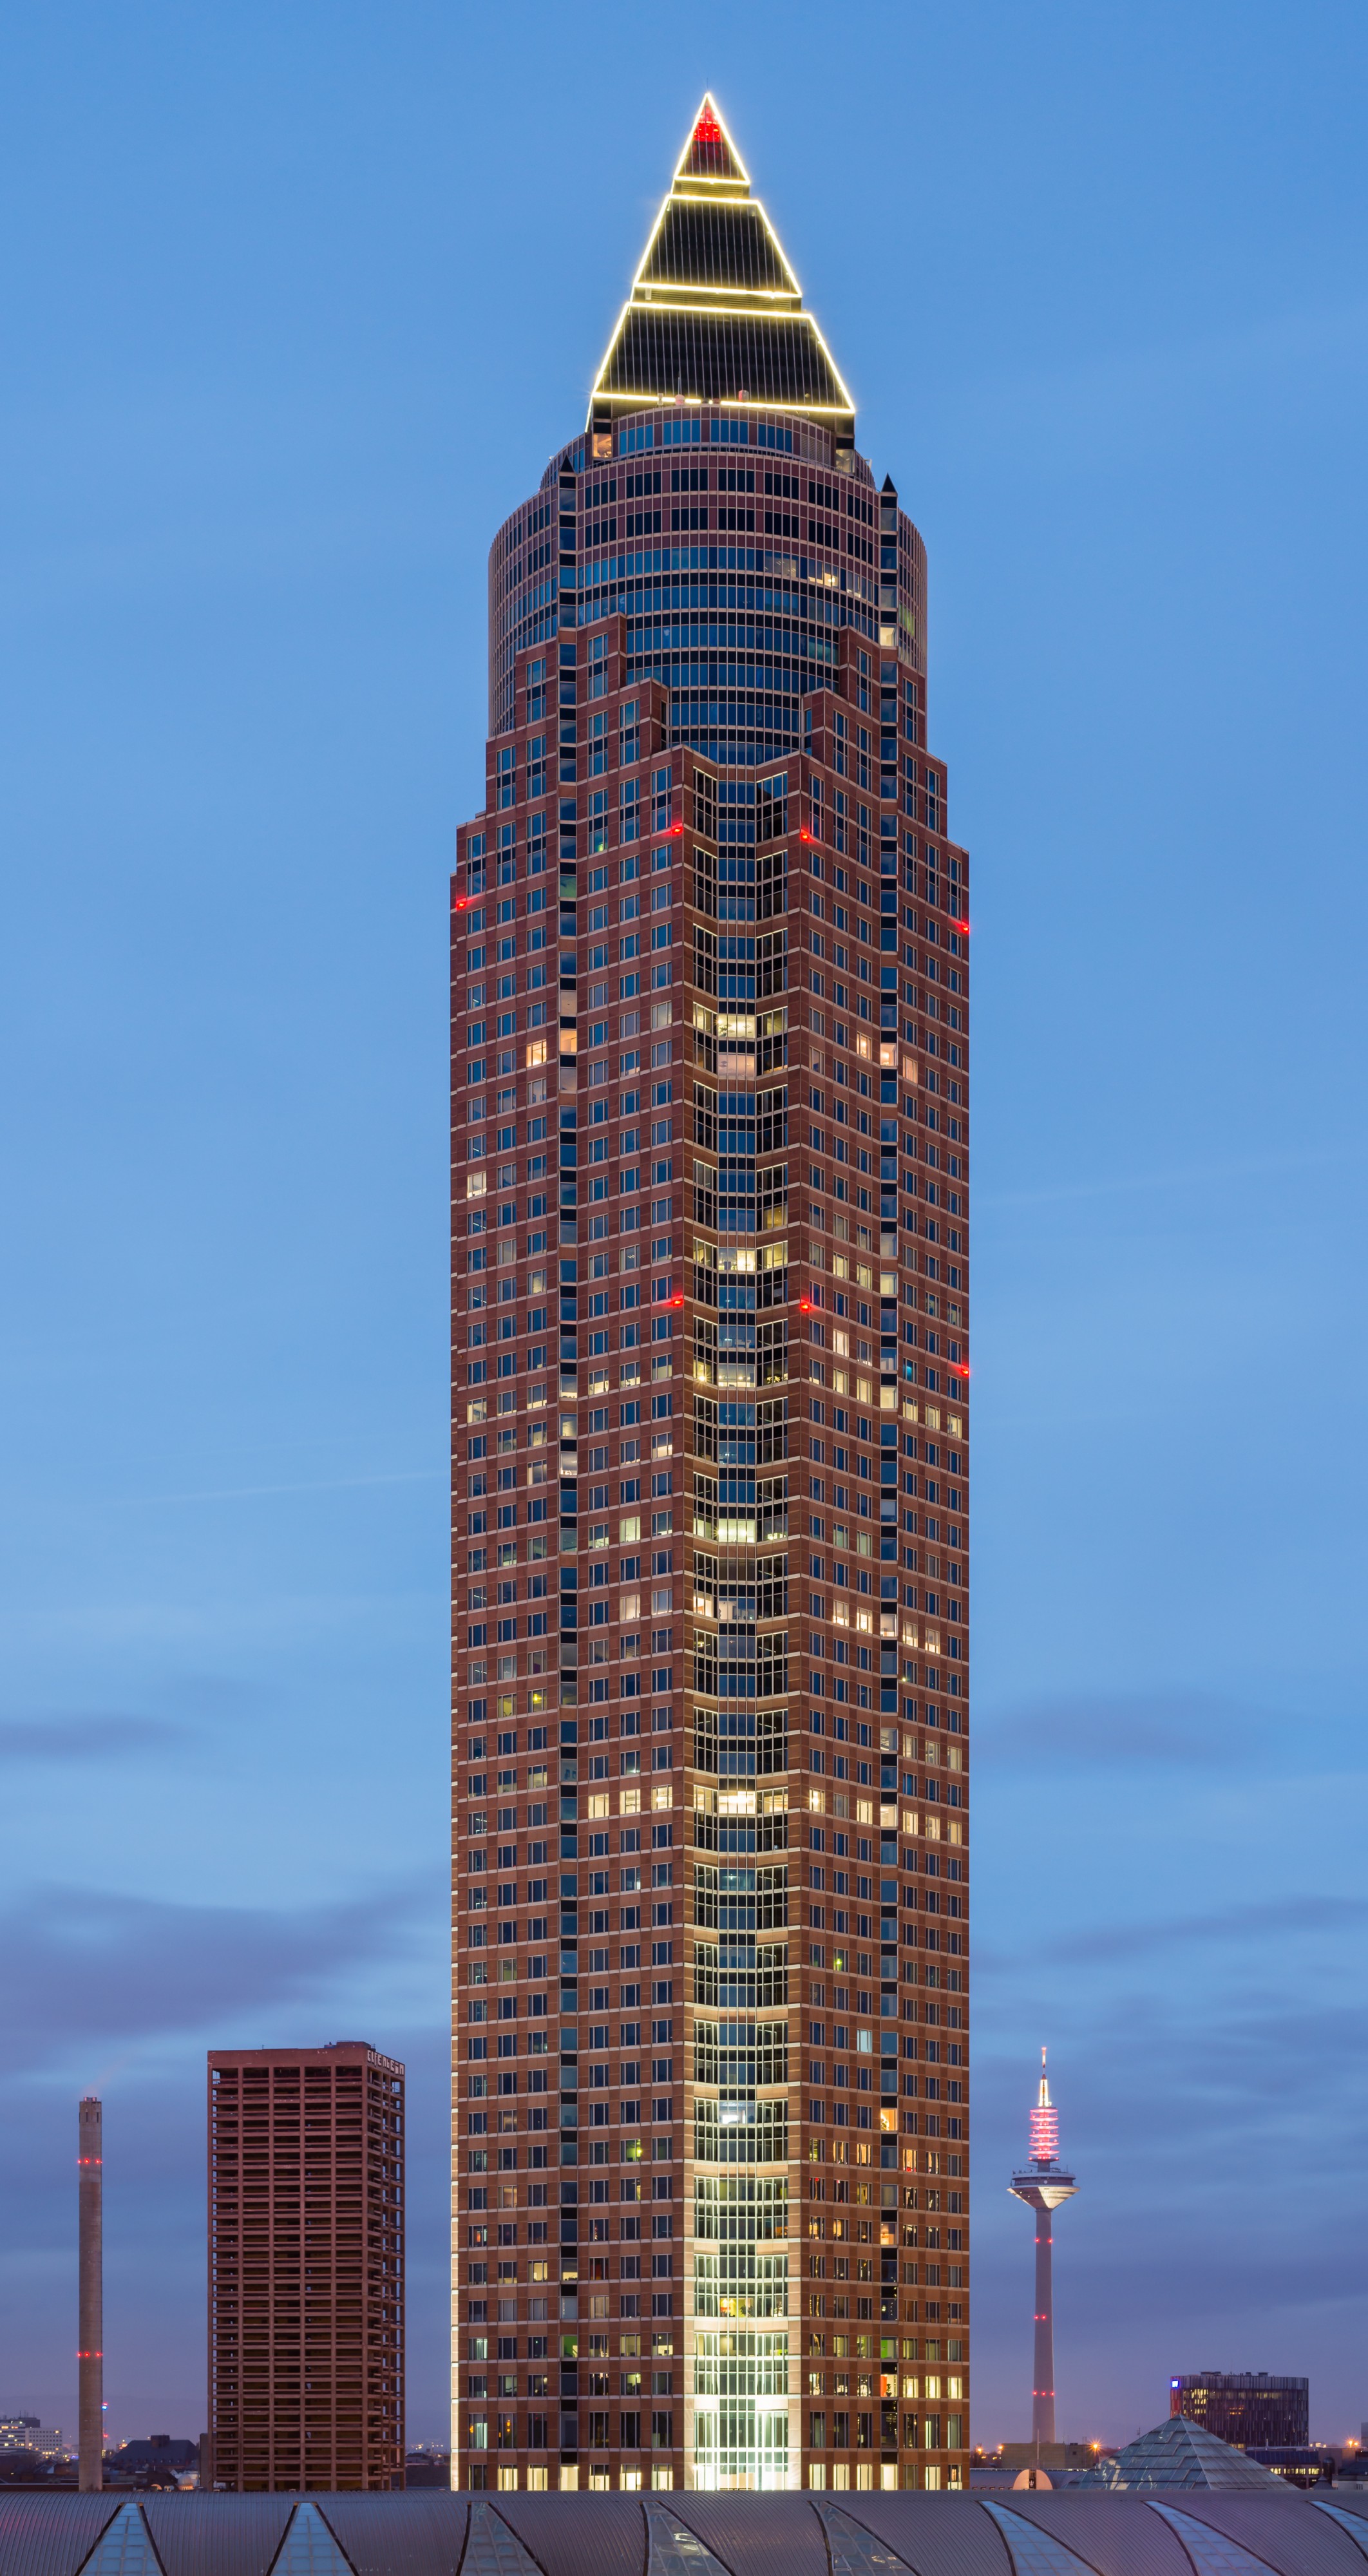 01-01-2014 - Messeturm - trade fair tower - Frankfurt- Germany - 04